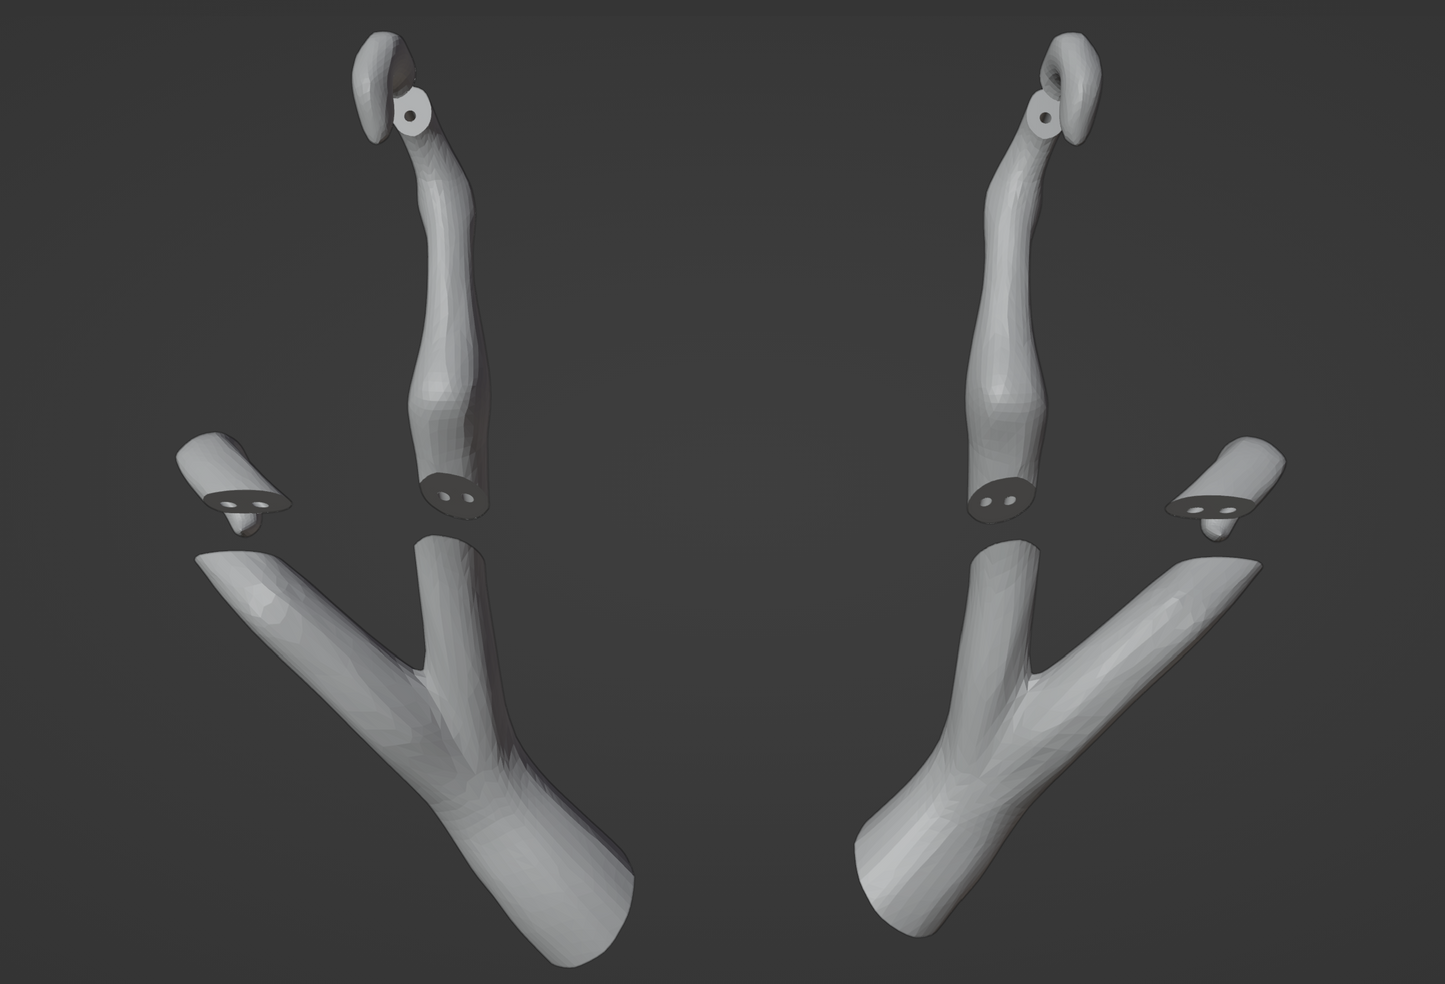 Zhongli Horns - Digital 3D Model Files and Physical 3D Printed Kit Options - Zhongli Cosplay